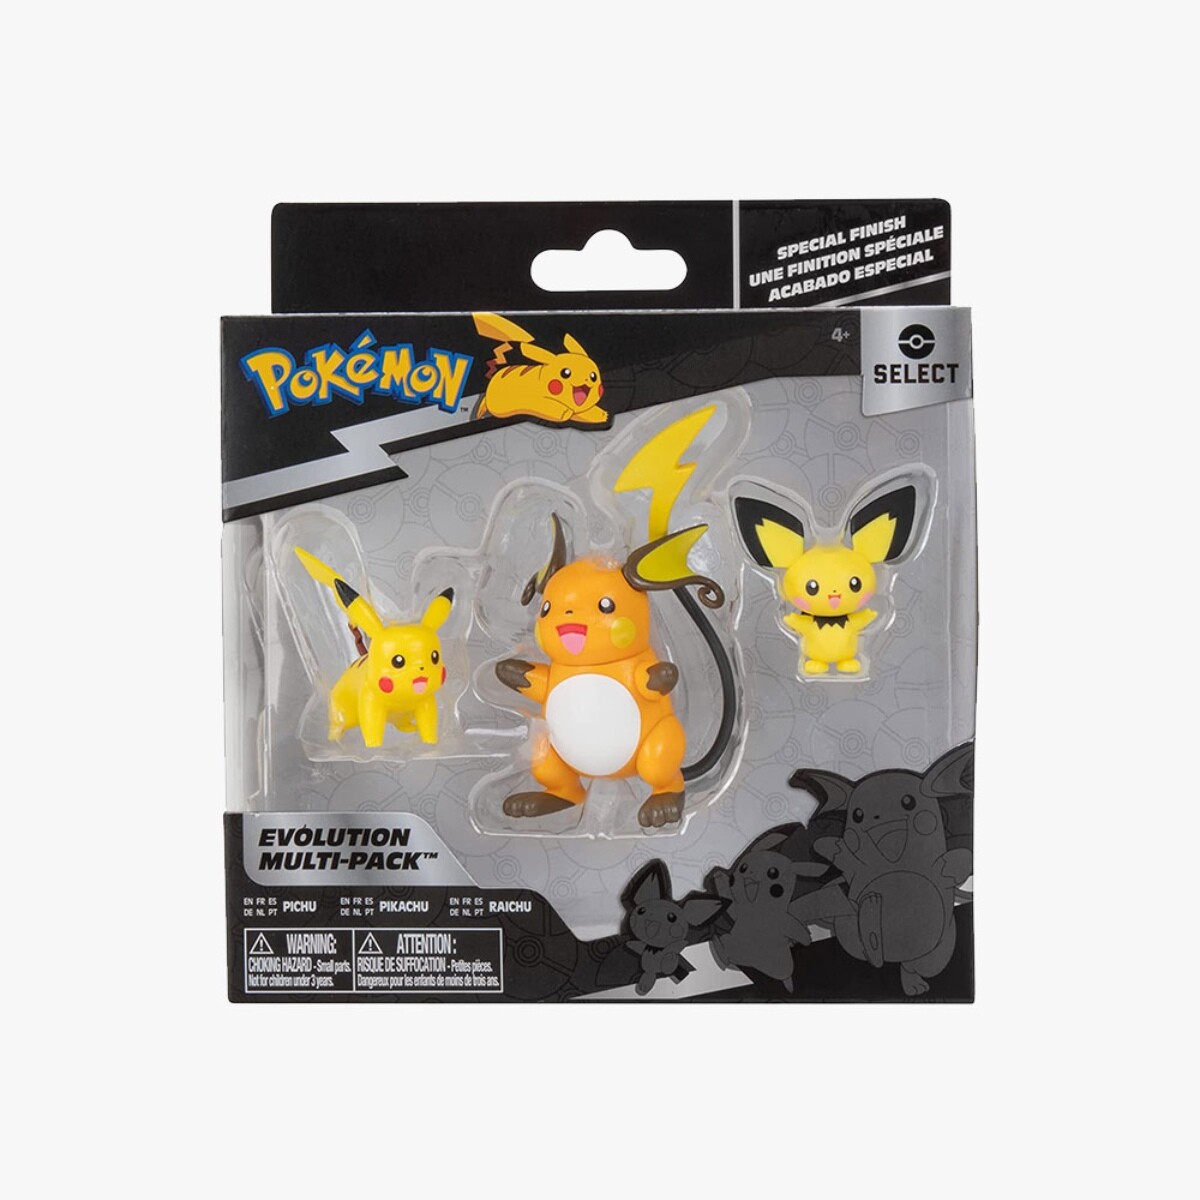 Evolution Multi-Pack Pokemon - Pikachu 